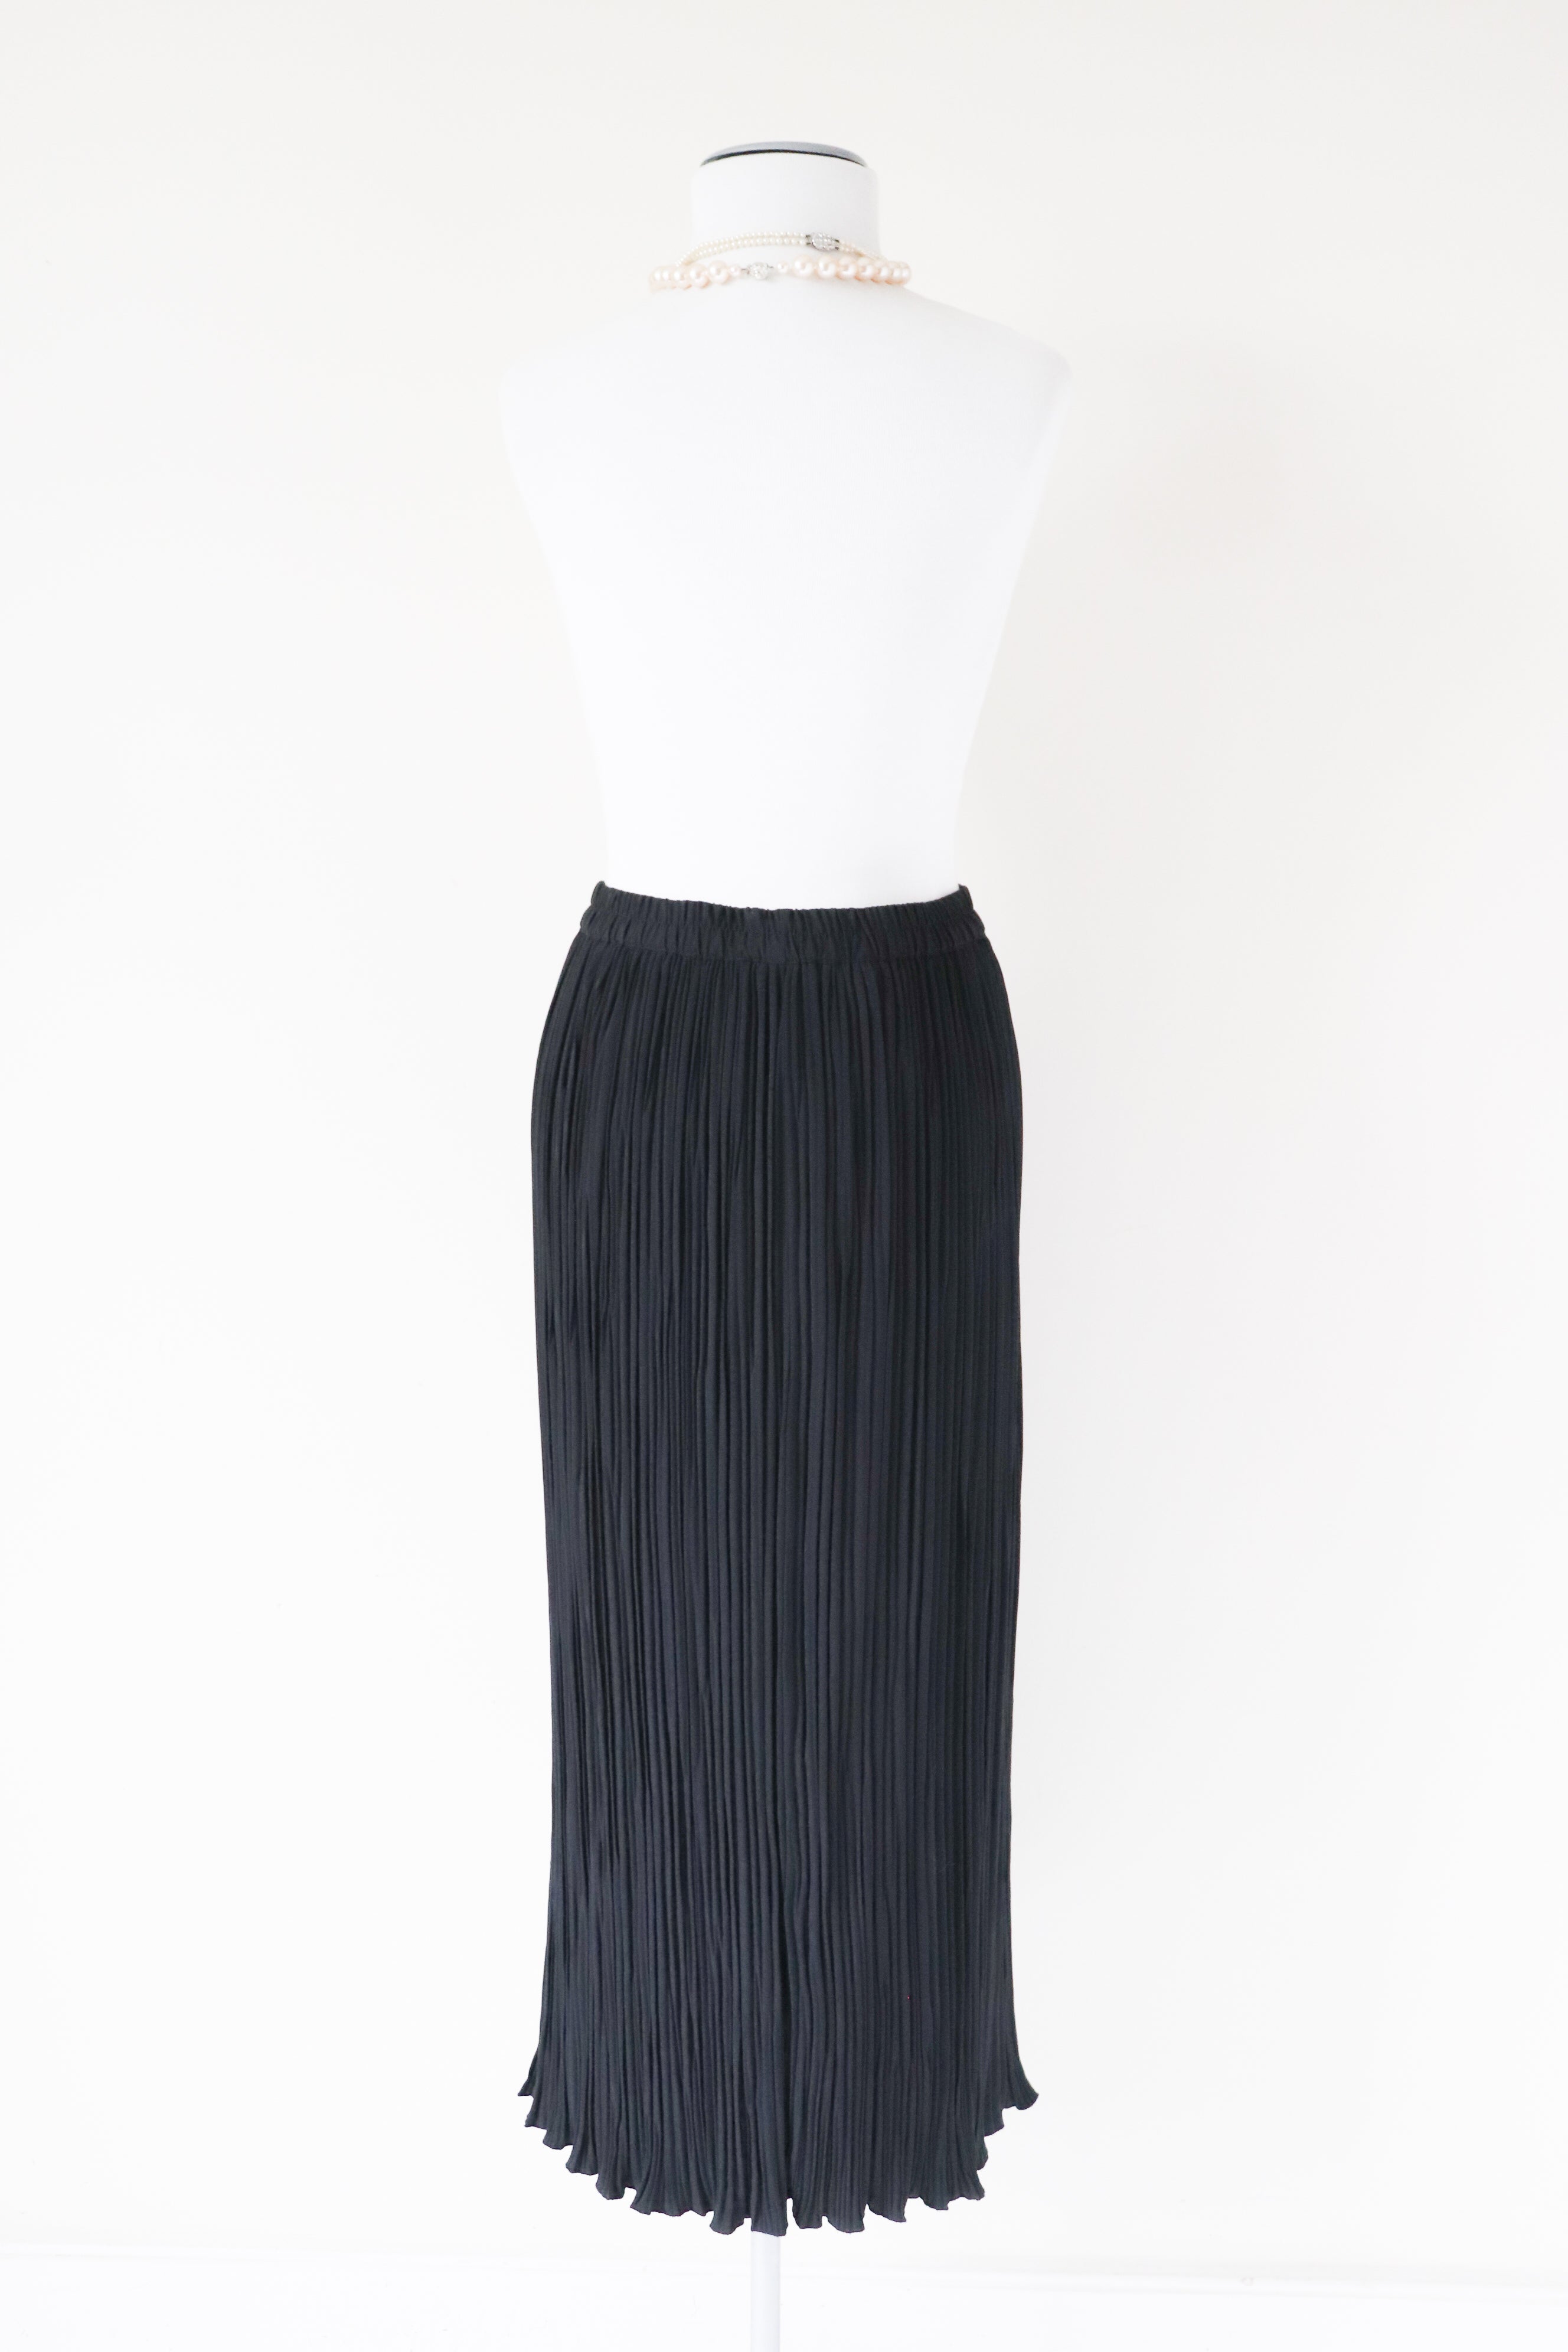 Pleated Black Midi Skirt - Polyester - Vintage 1990s - Upper Class - L / UK 14